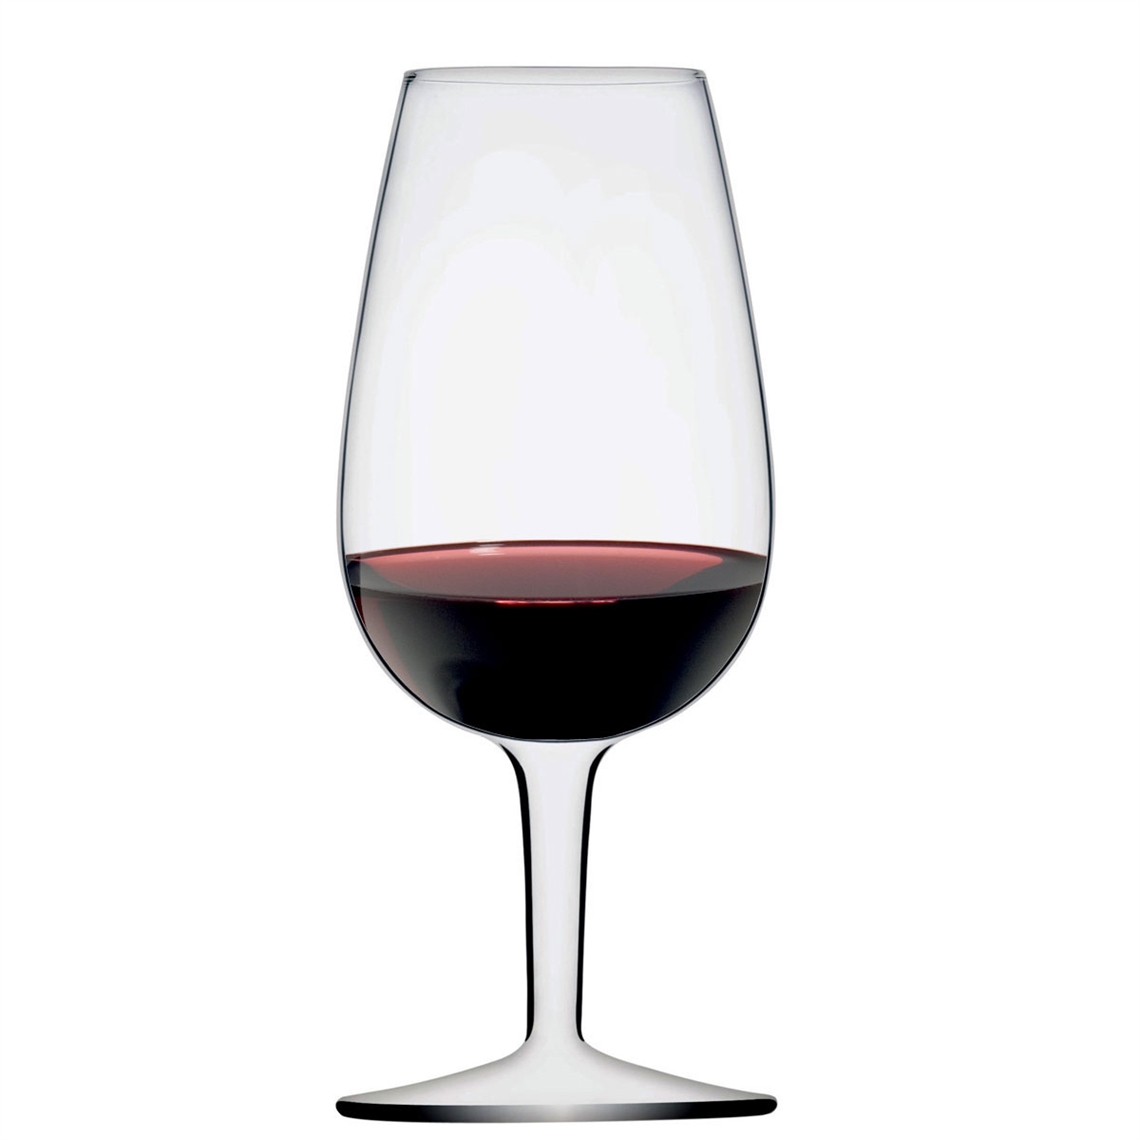 View more whisky glasses from our Wine Tasting Glasses range